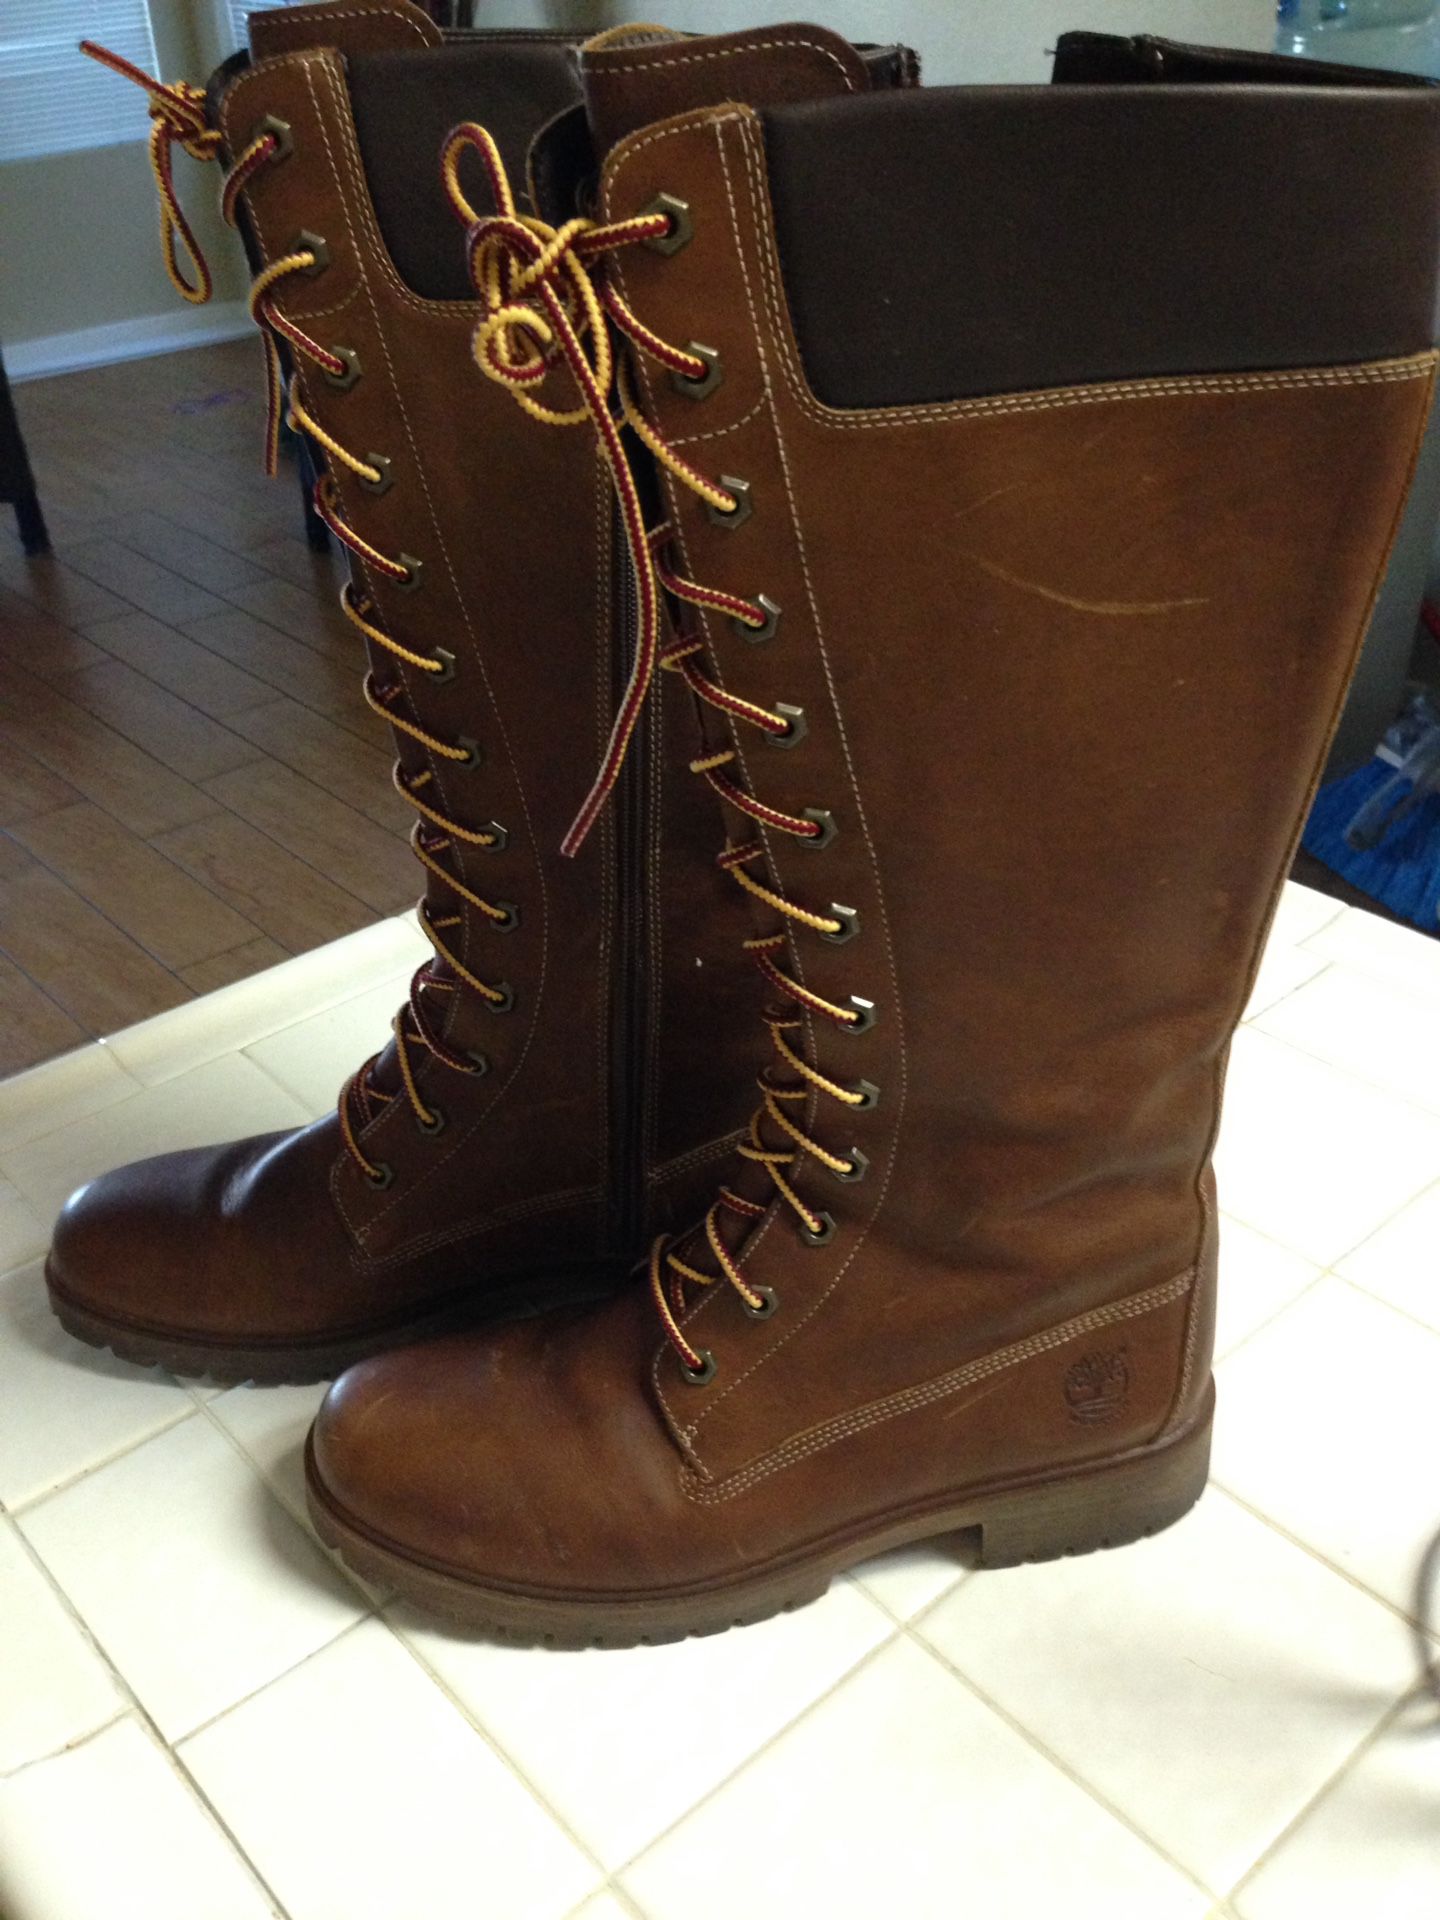 boots size 9 women